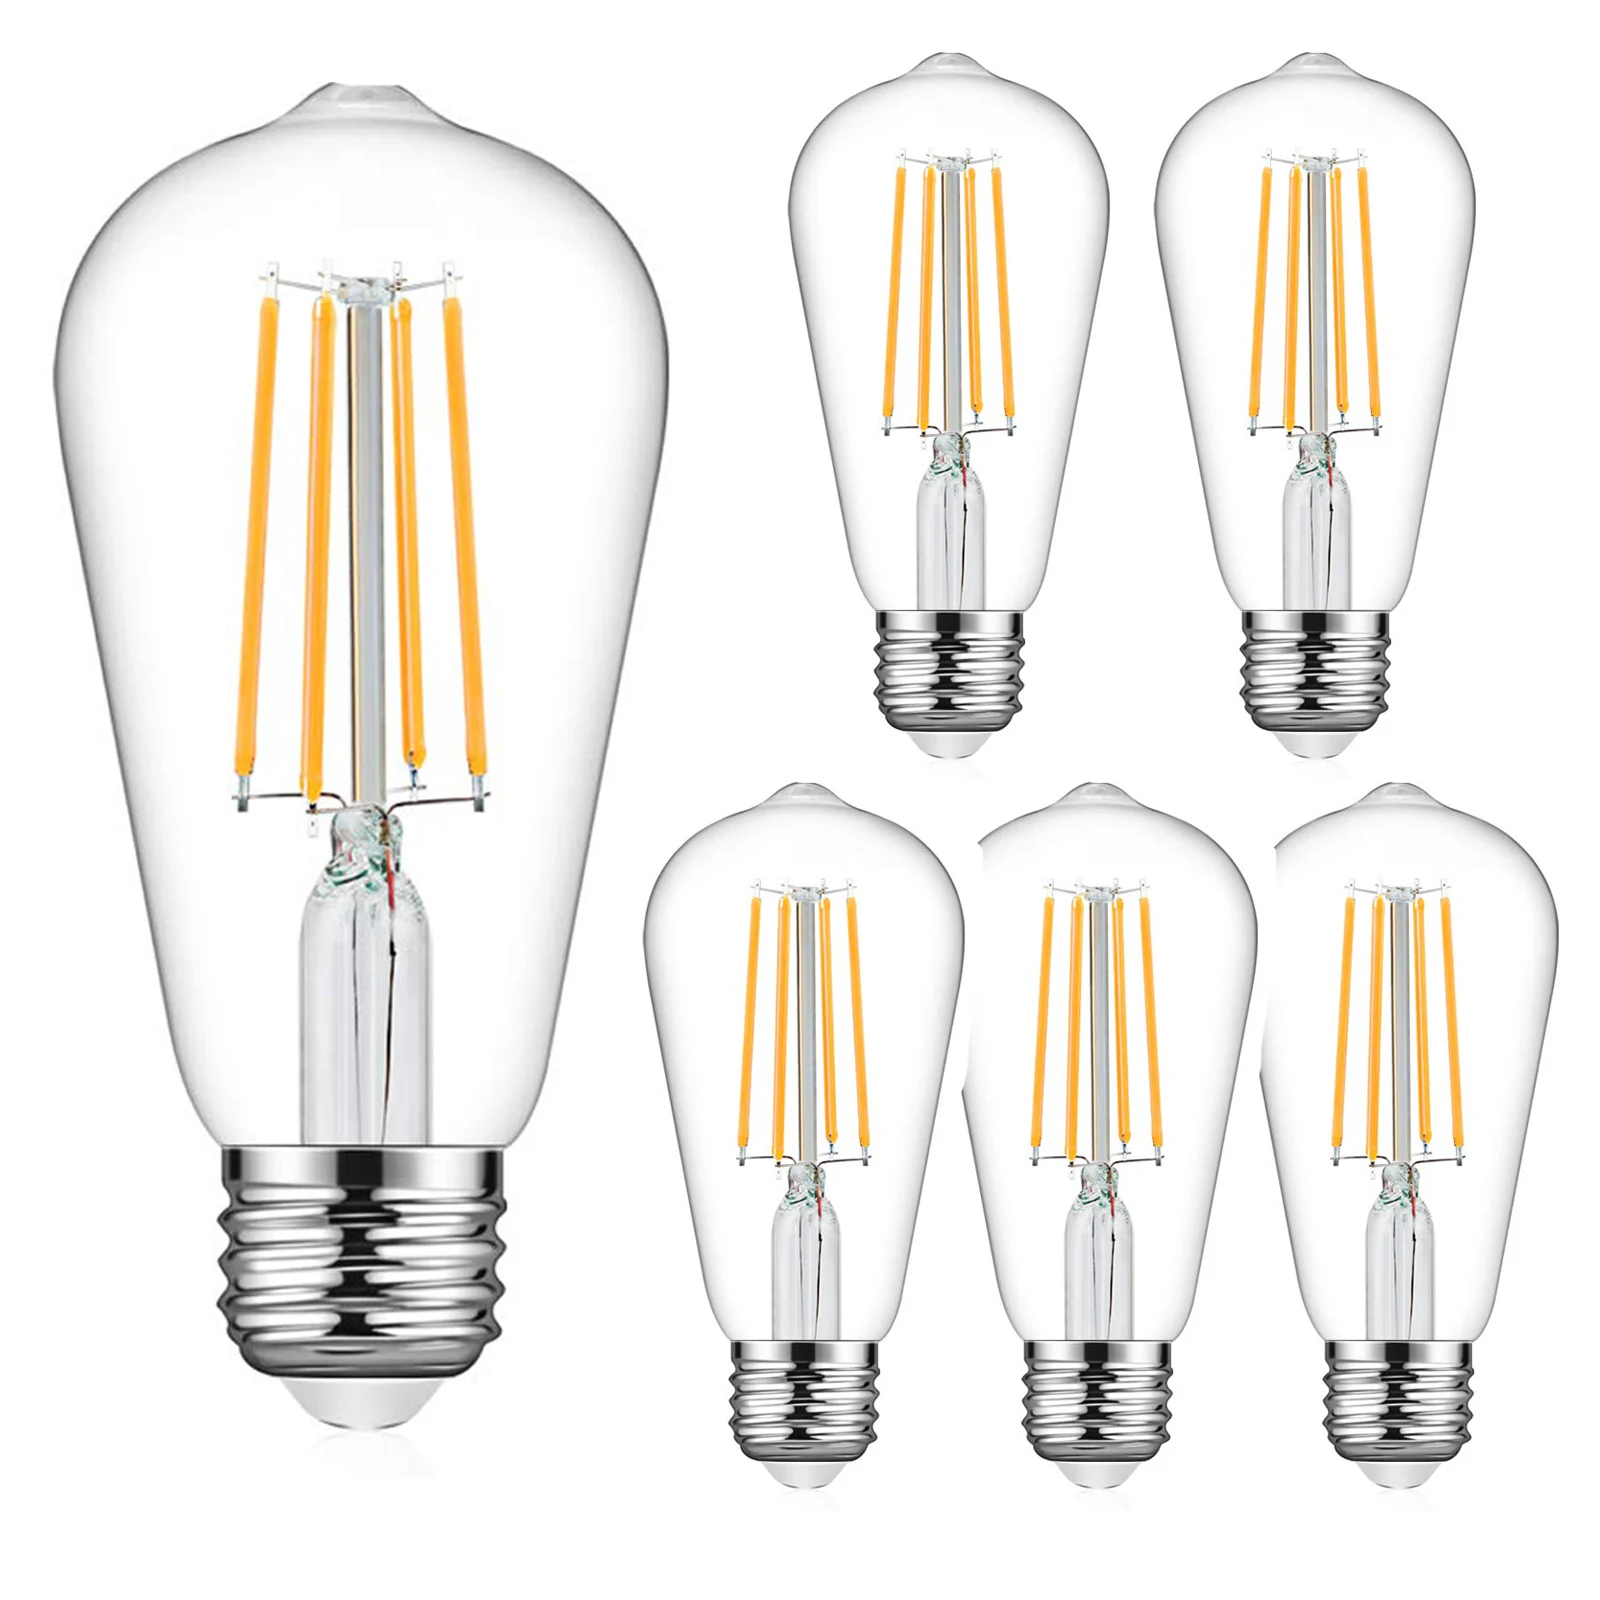 6PCS/LOTS ST64 4W 8W Dimmable Led Bulb Edison Retro Bulb Clear Glass LED Bulb 220V Design Energy Saving 360 Degree Lamp